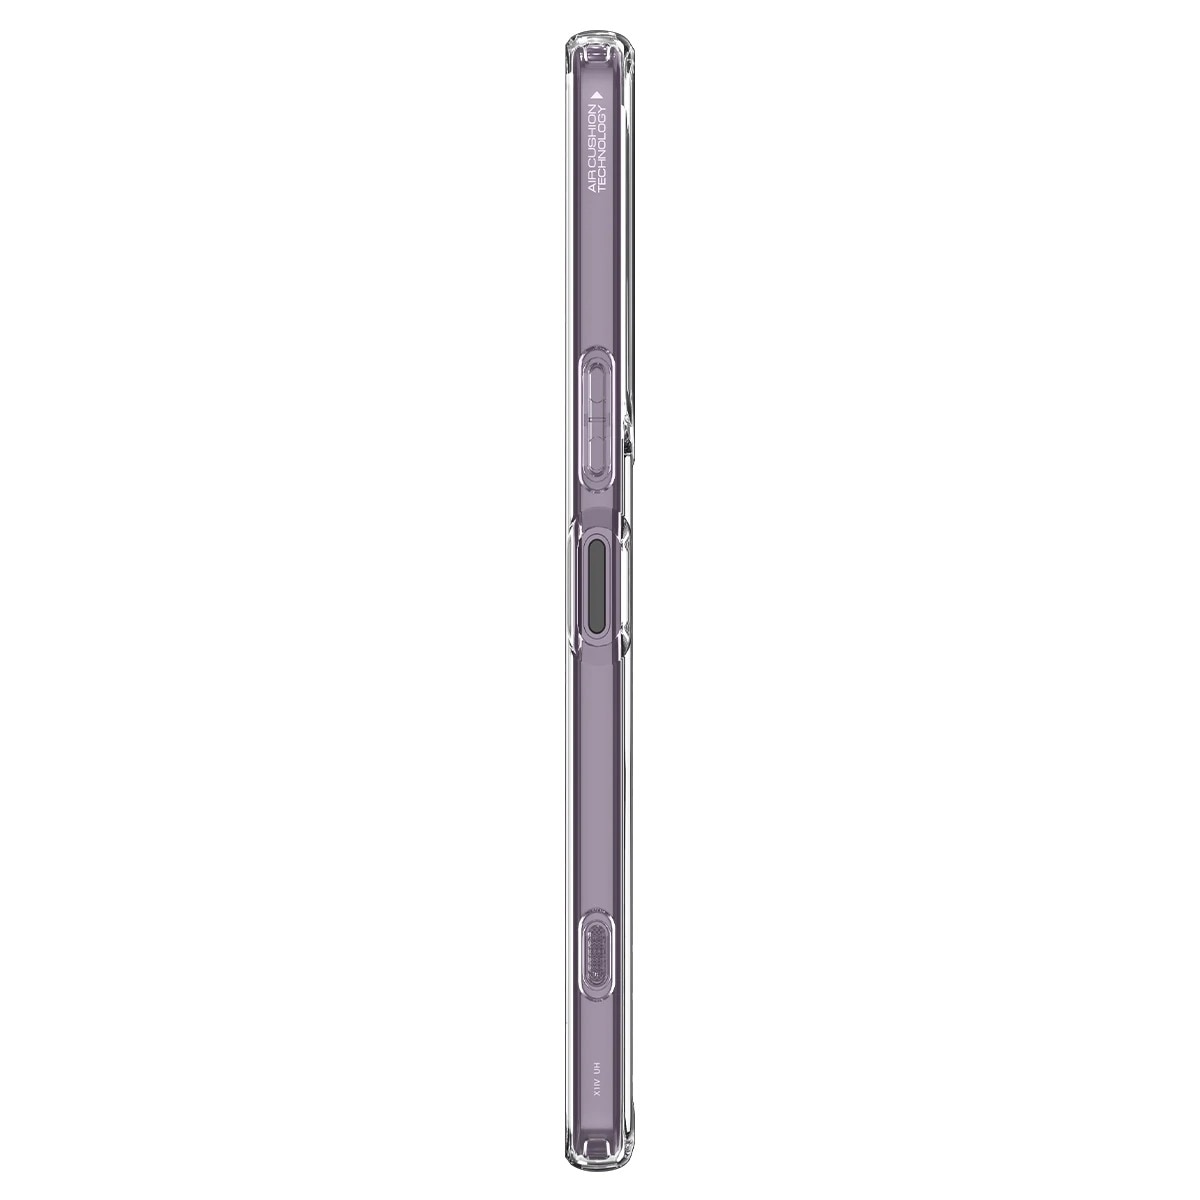 Sony Xperia 1 IV Case Ultra Hybrid Crystal Clear